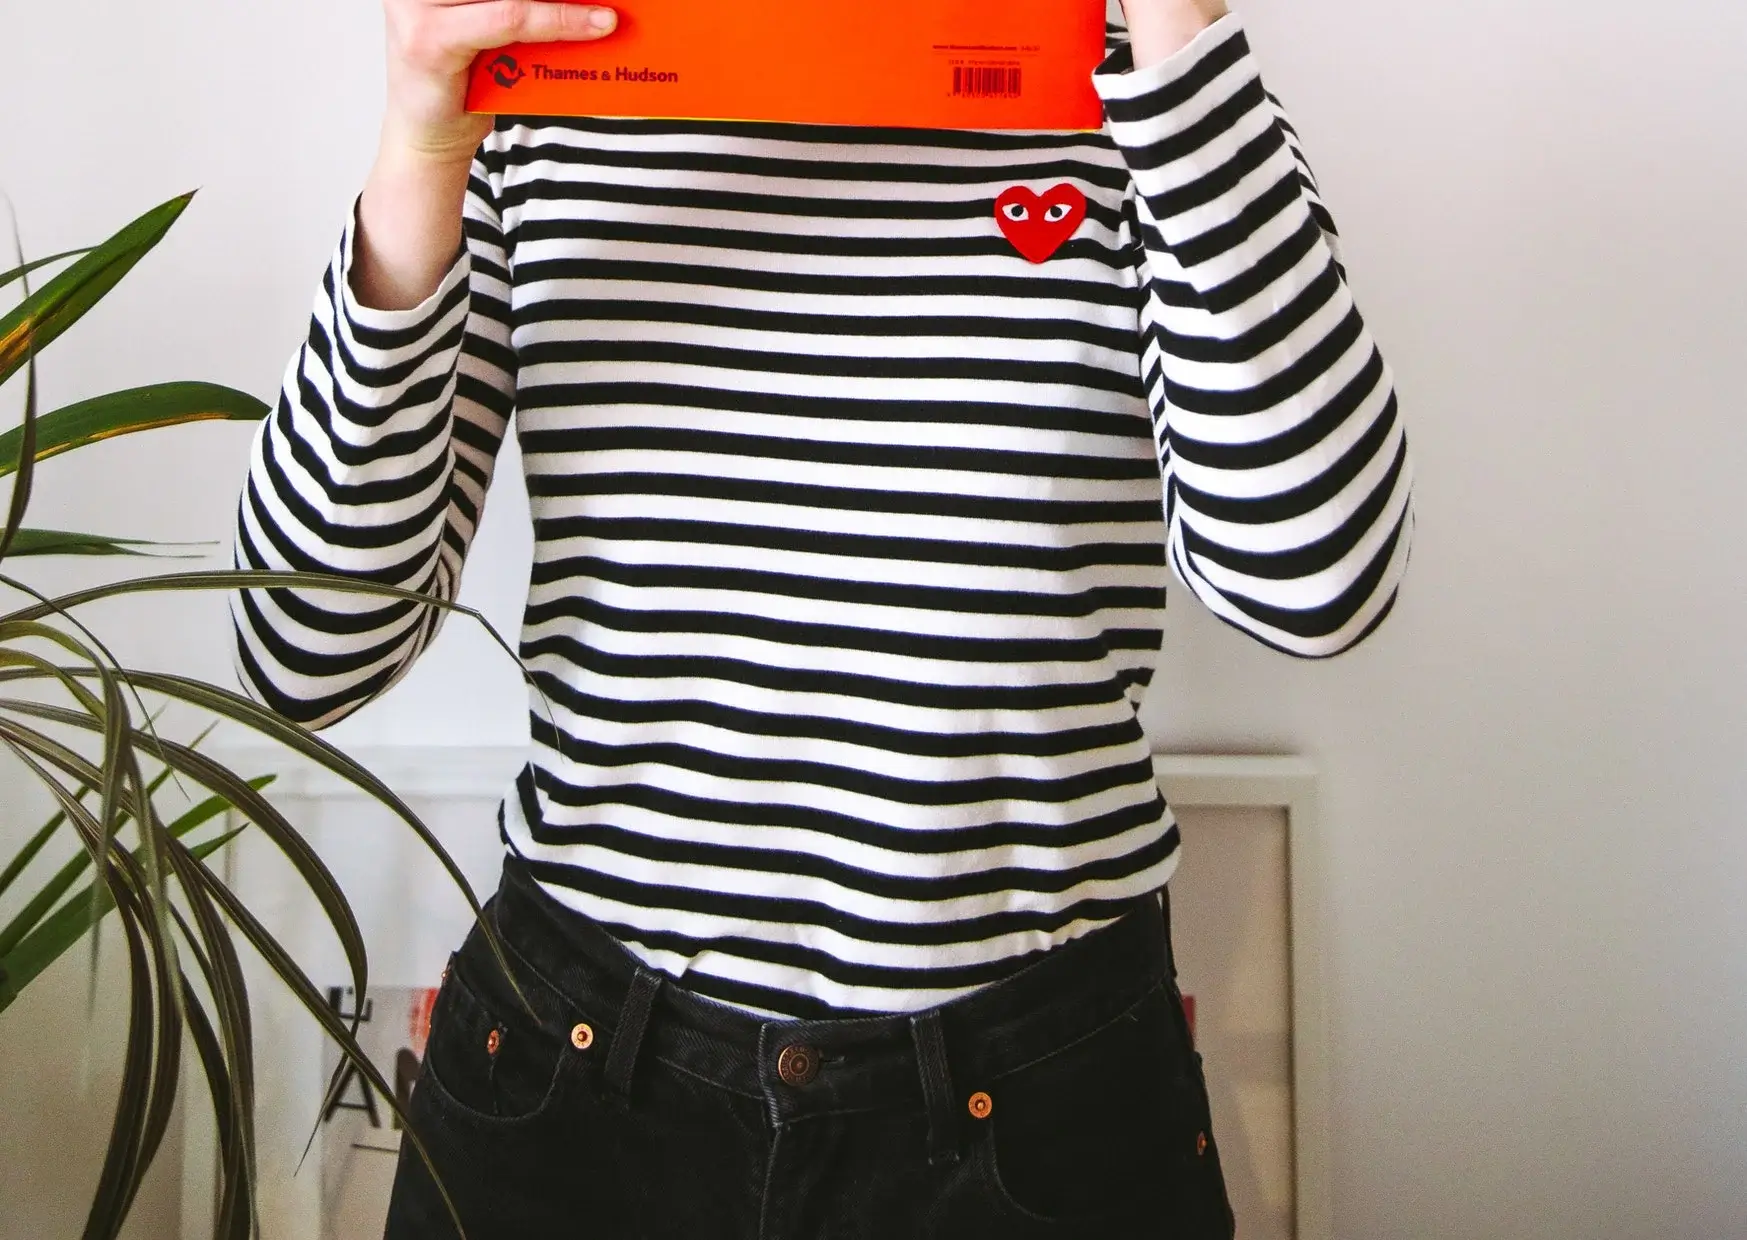 Stripes Shirt Girl Holding Book